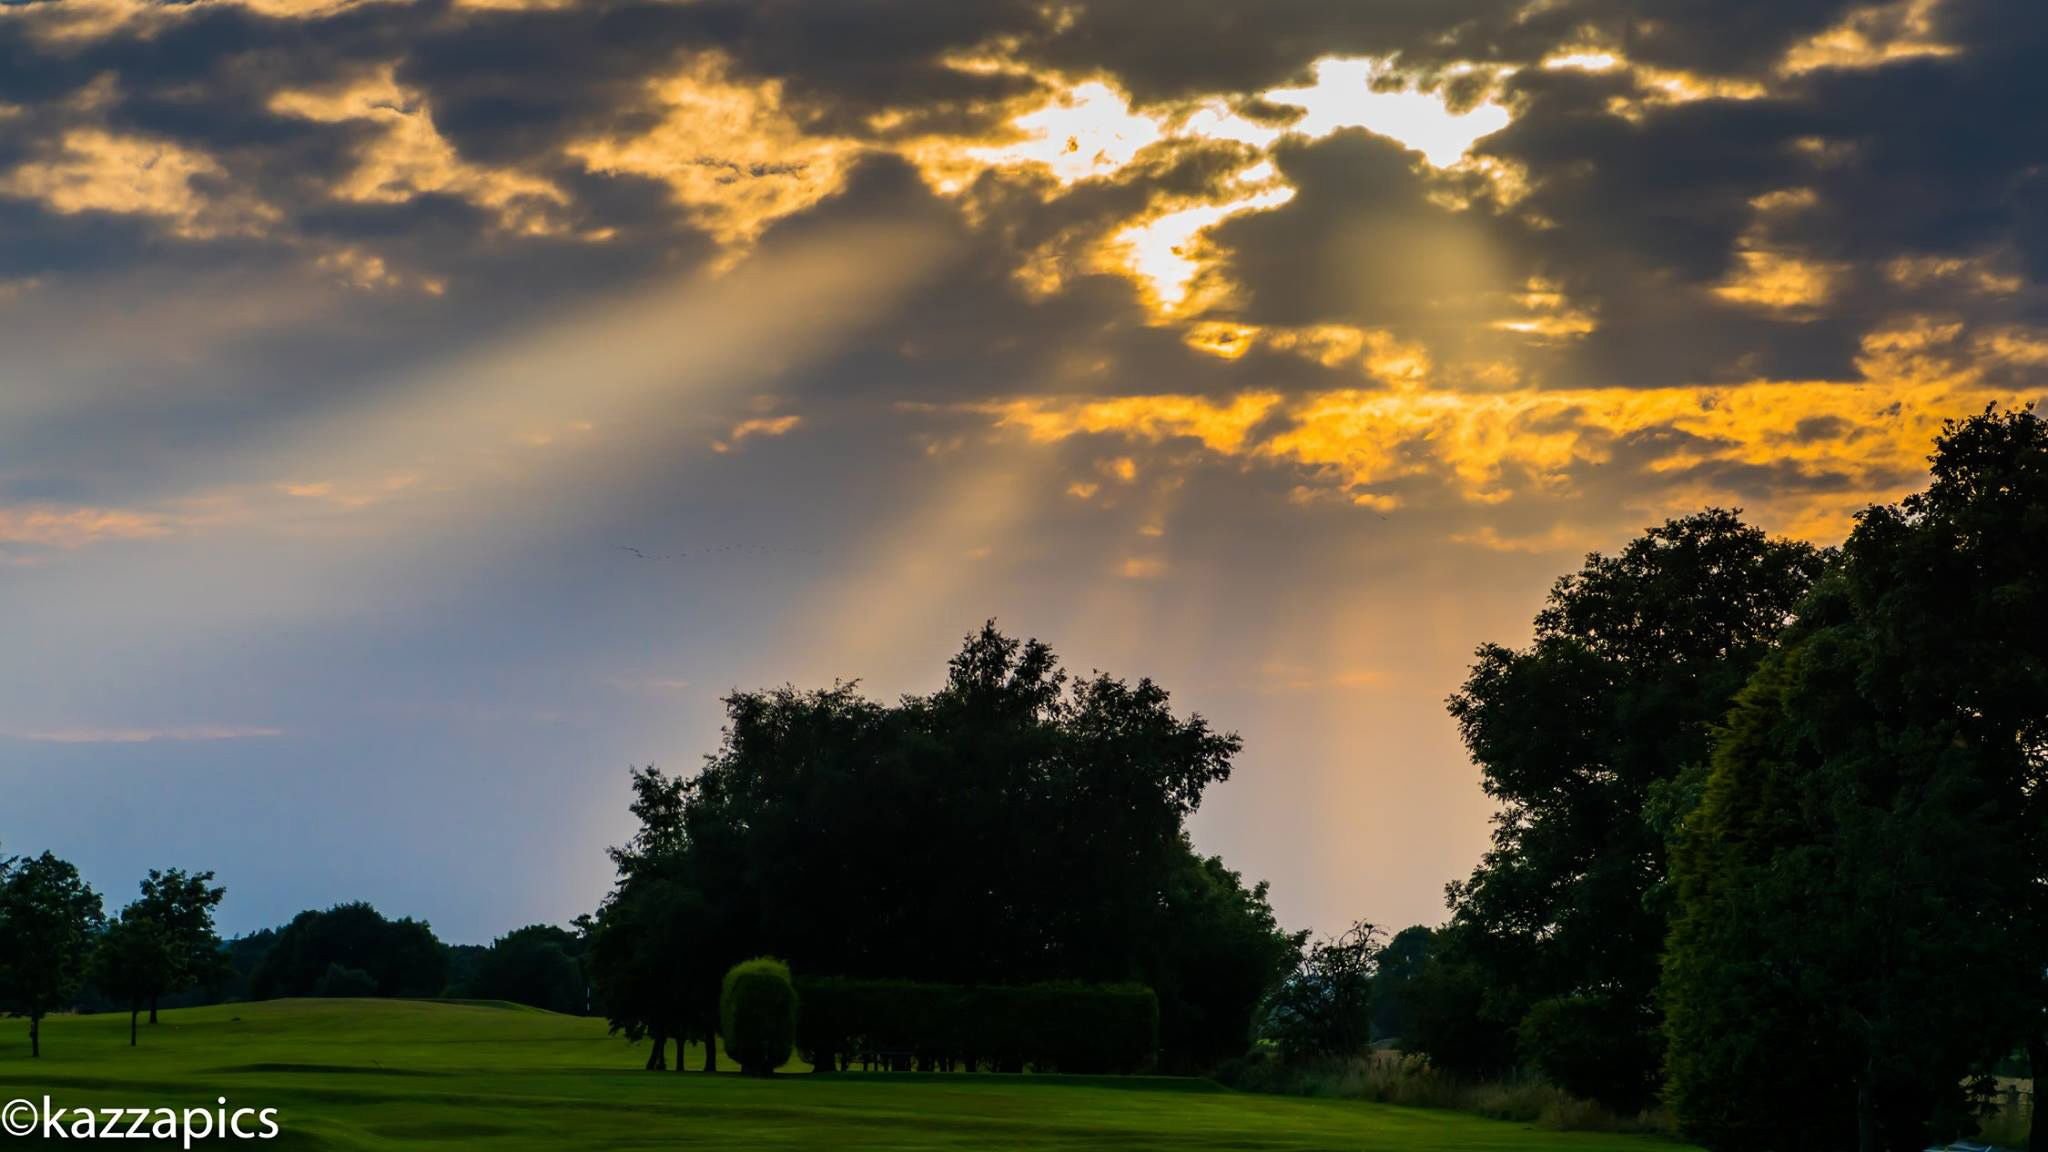 Golf course at sunrise 
